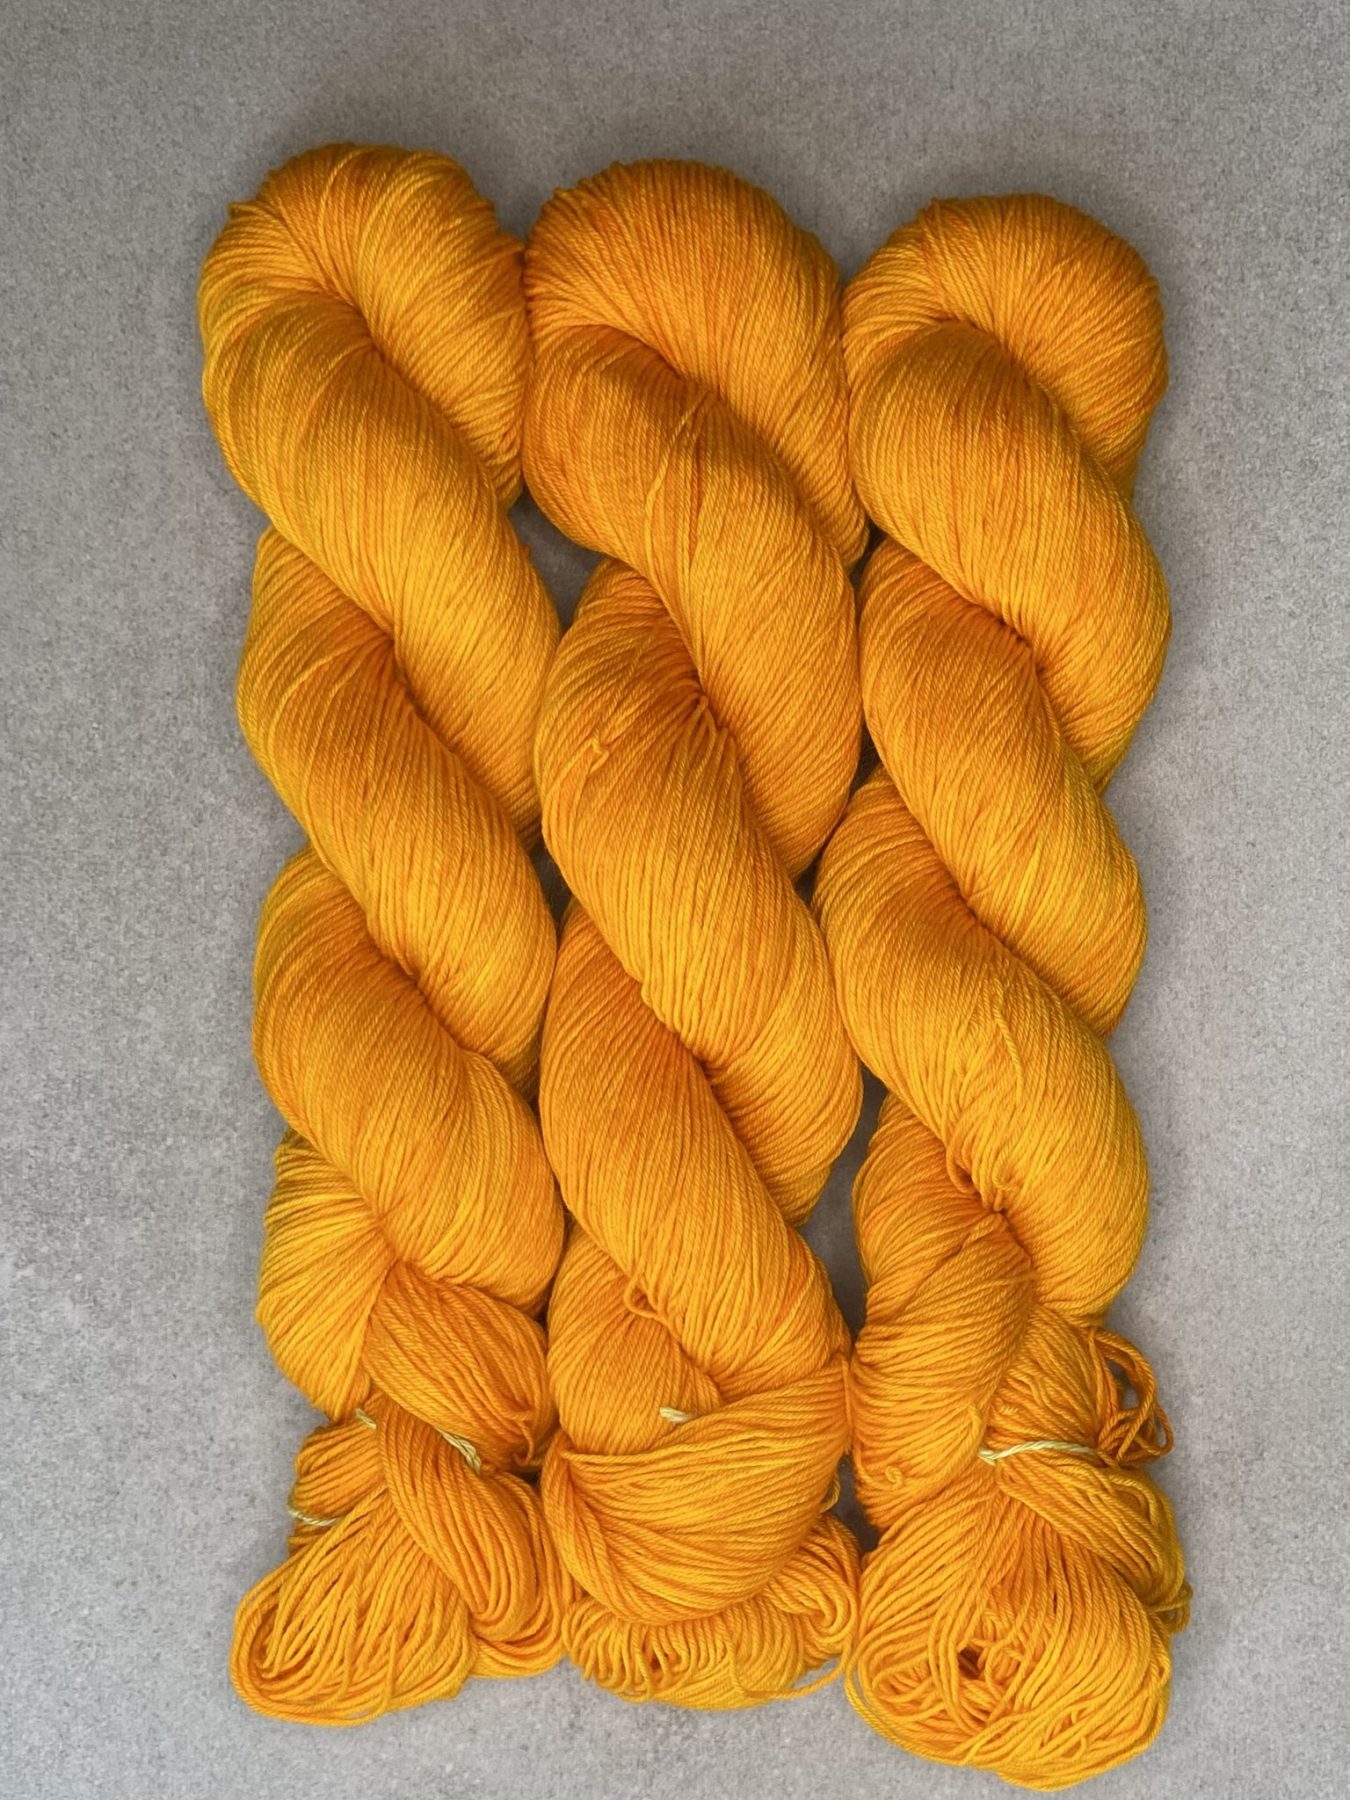 Tangerine Twist - 4 ply - Hand Dyed Yarn